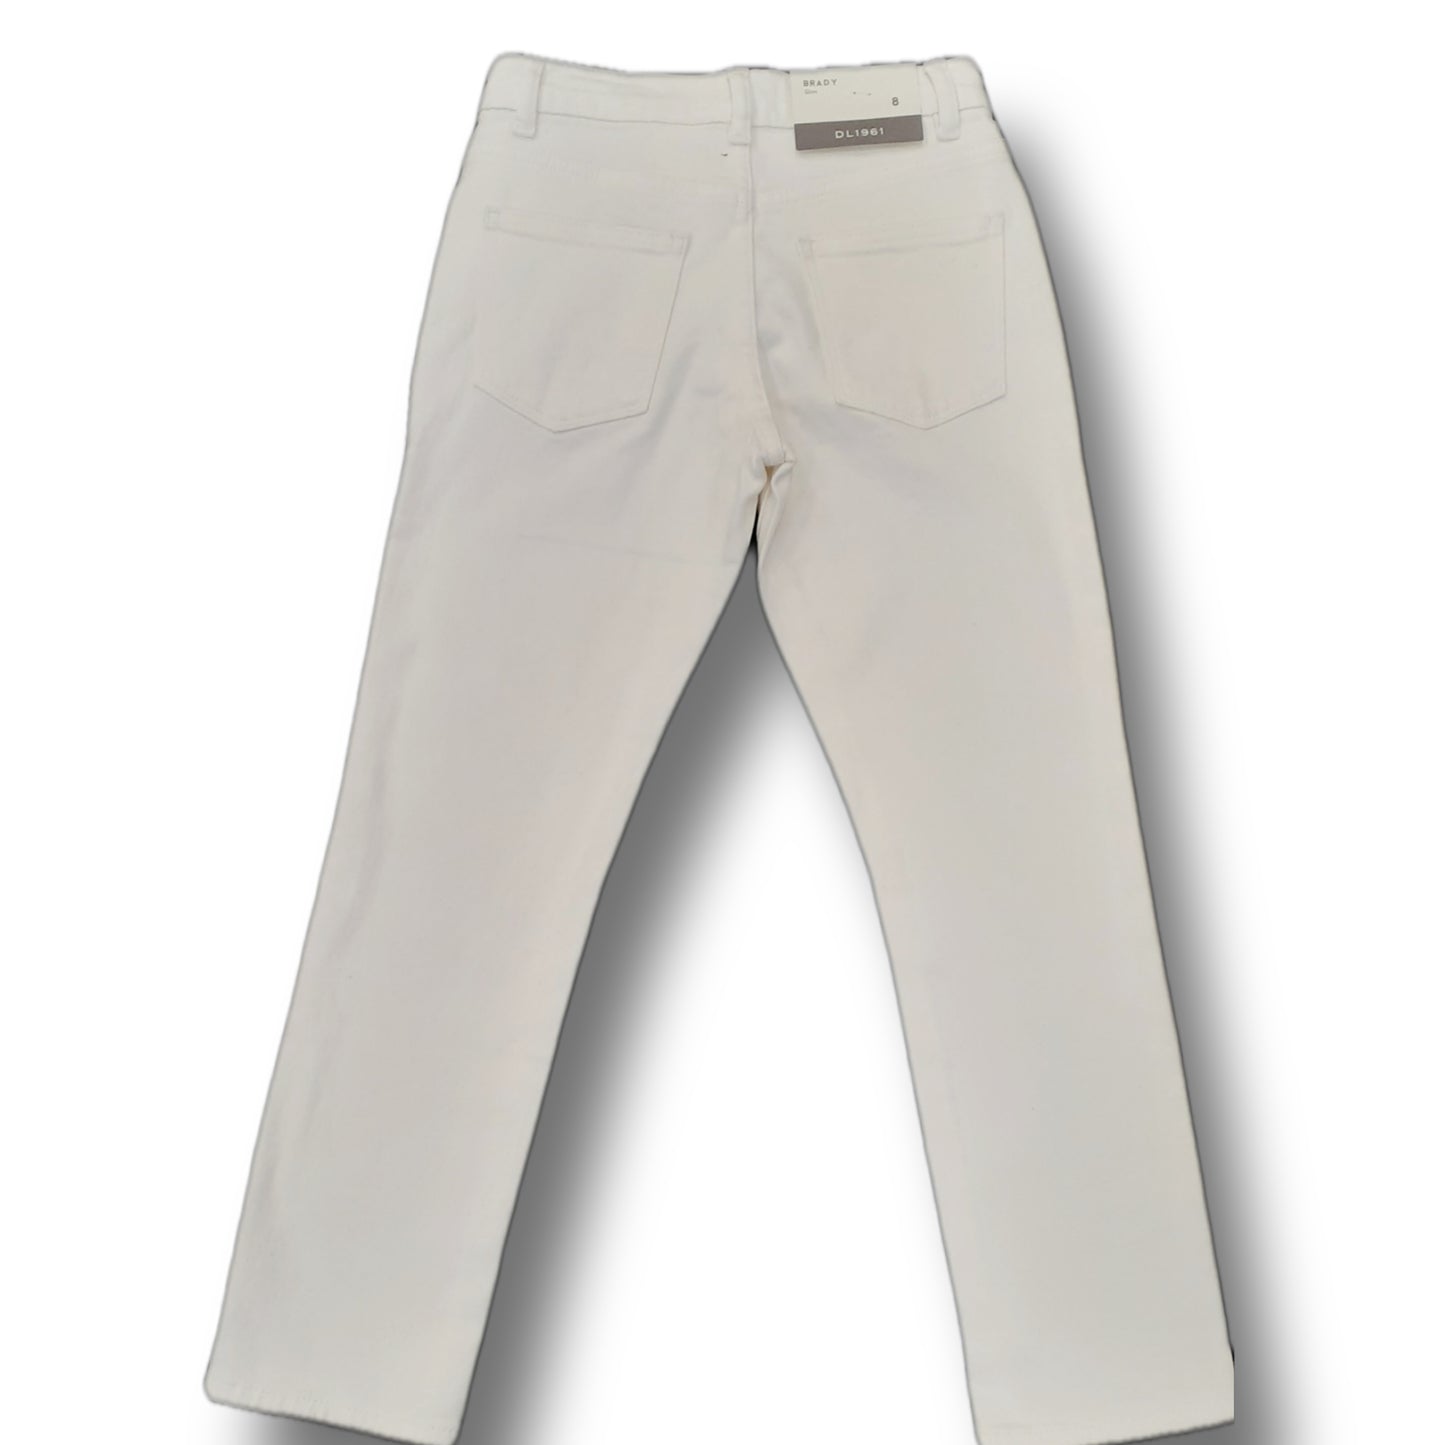 DL 1961 Brady boys white denim jeans